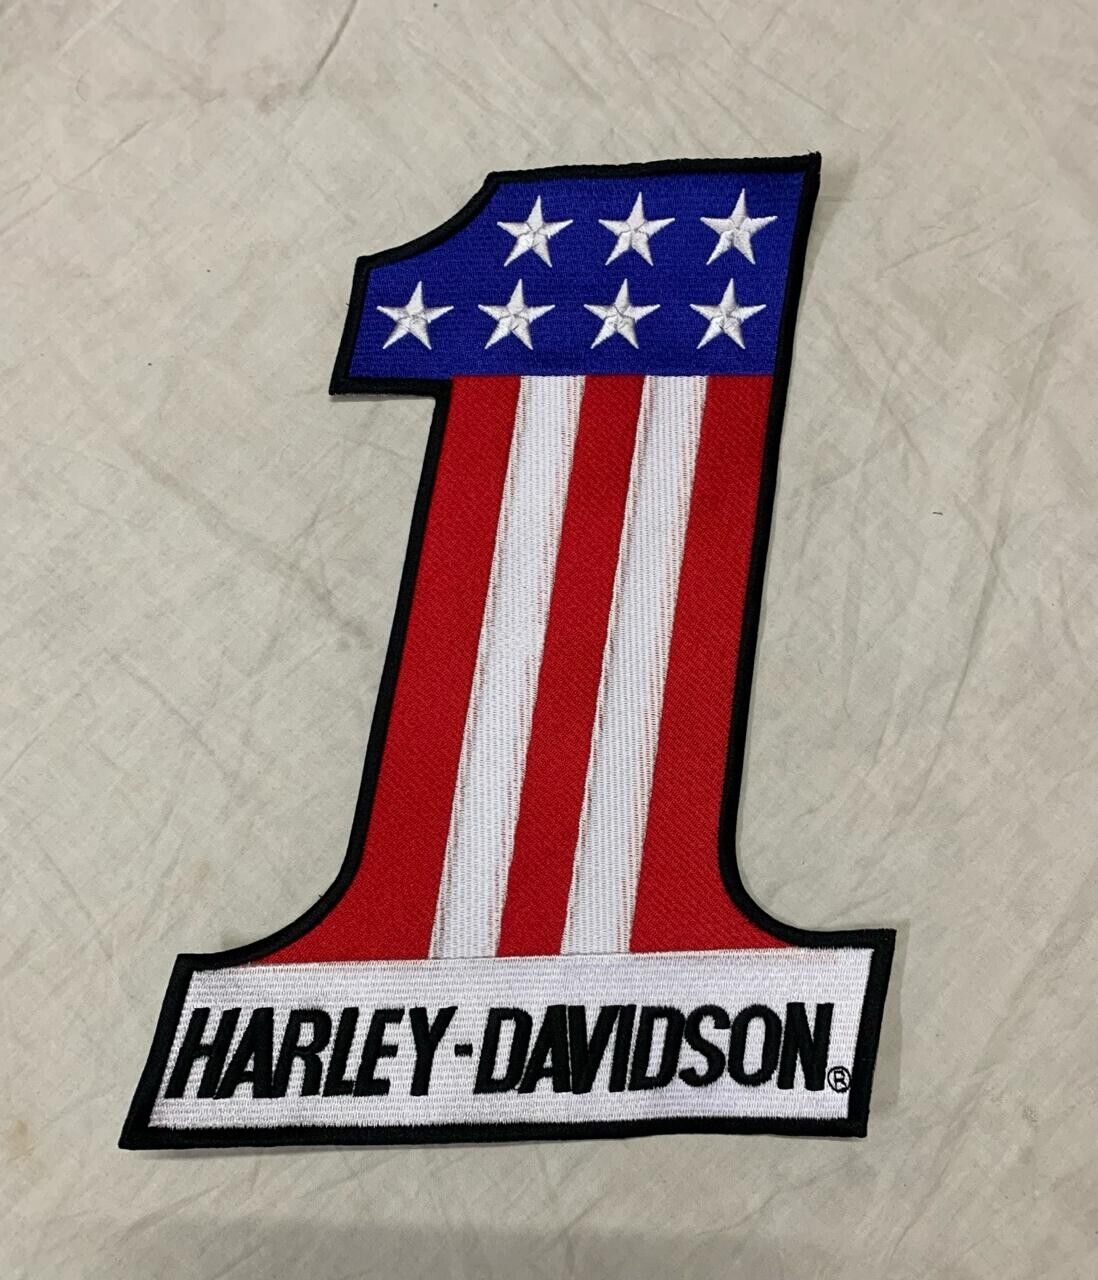 Harley Davidson #1 Large Patch - Harley Davidson Motorcycle Embroidery Patch